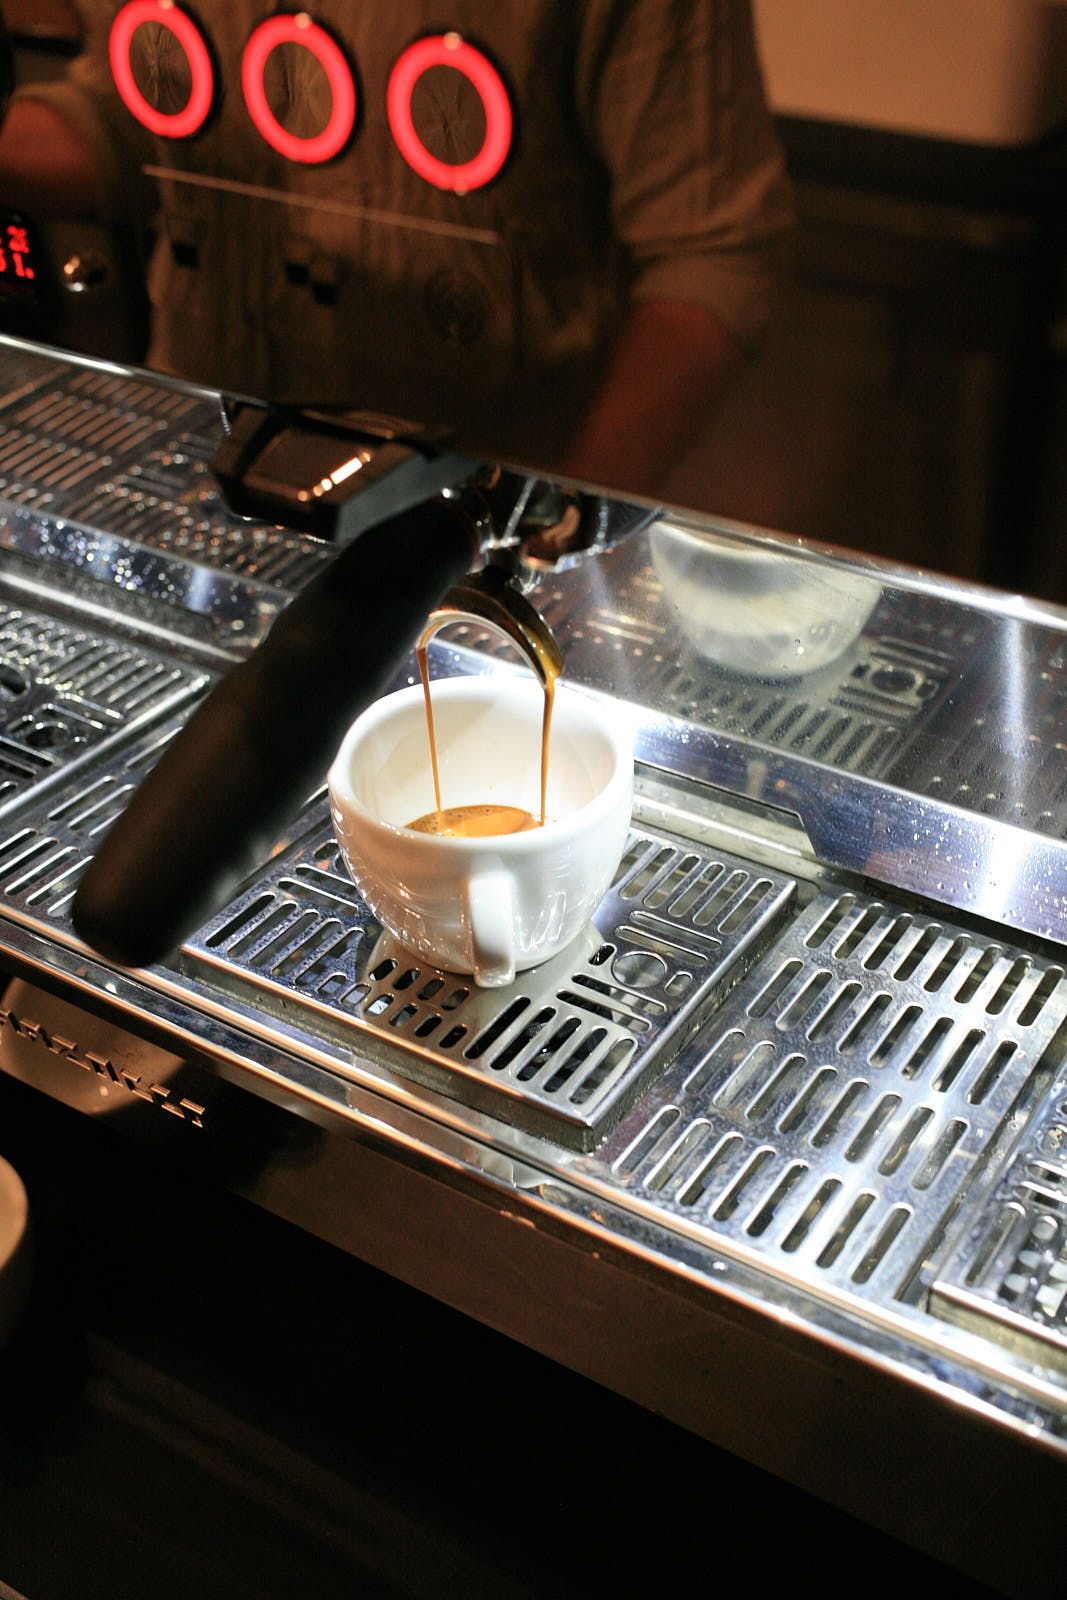 A shot of espresso flows out of a portafilter into a white ceramic cup.